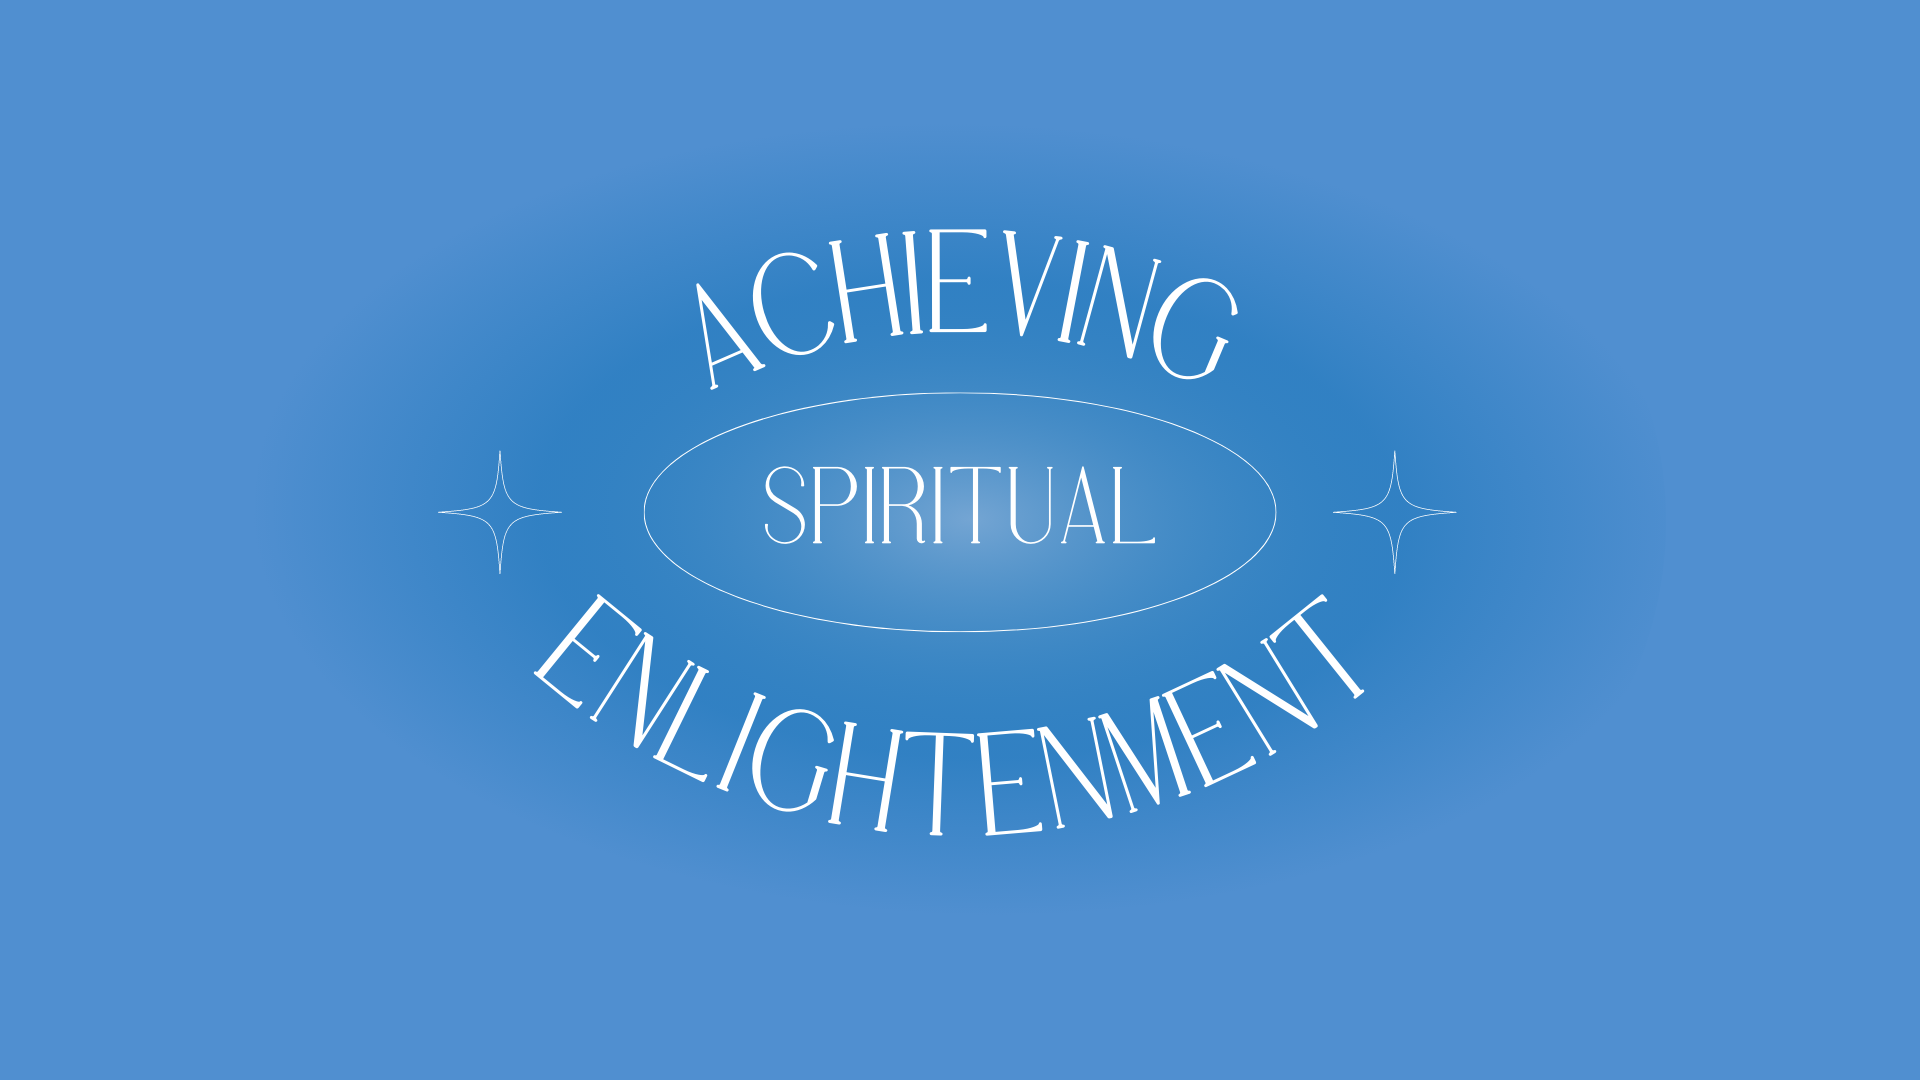 Achieving Spiritual Enlightenment Through Yoga and Meditation